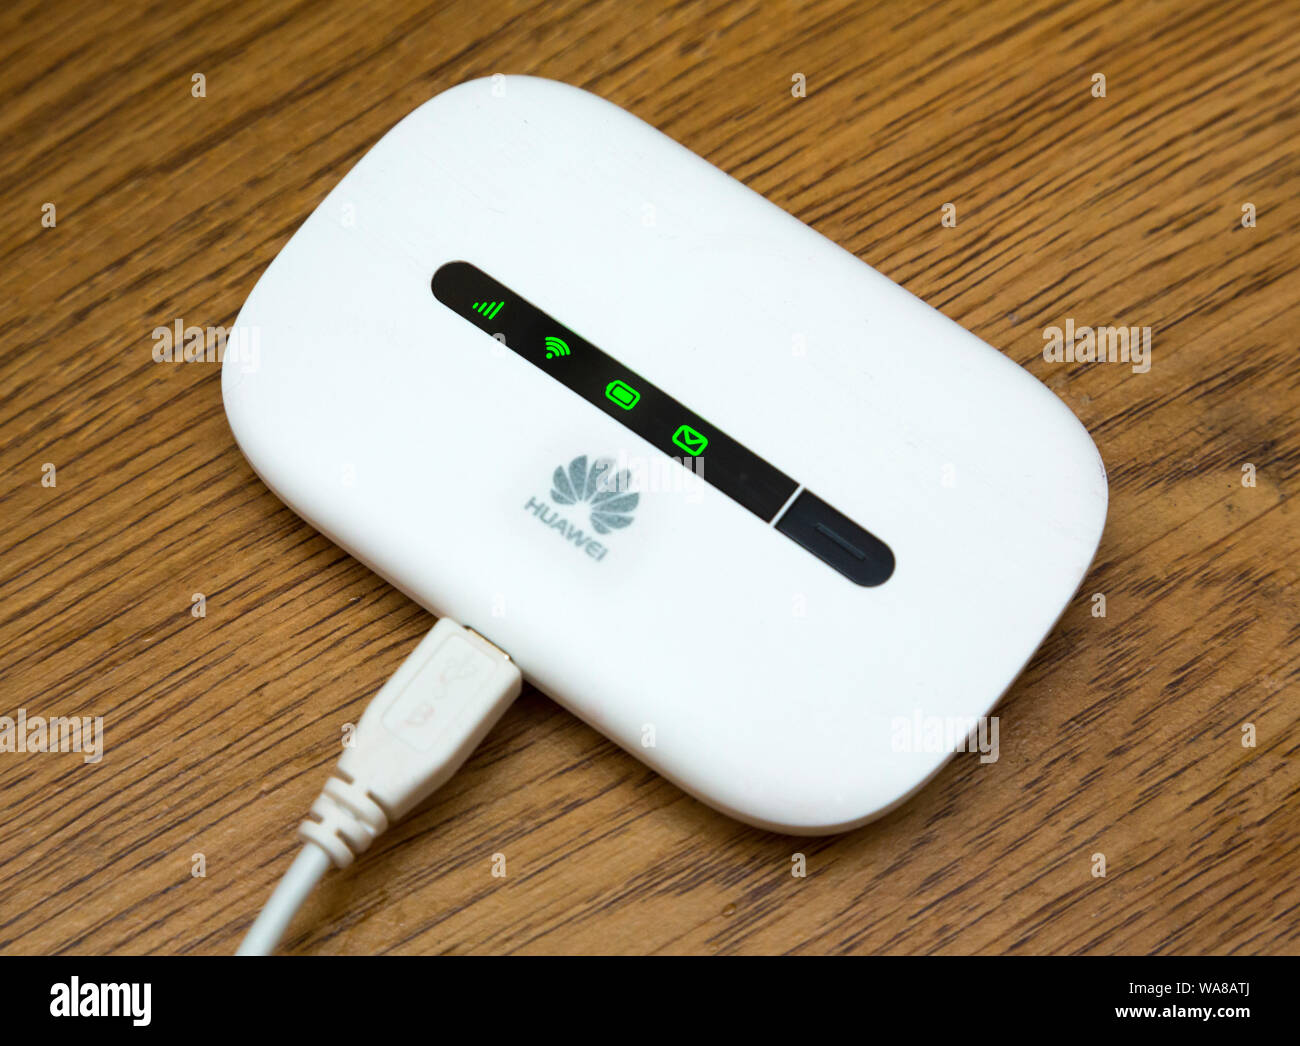 Huawei E5330 3G modem / router Stock Photo - Alamy